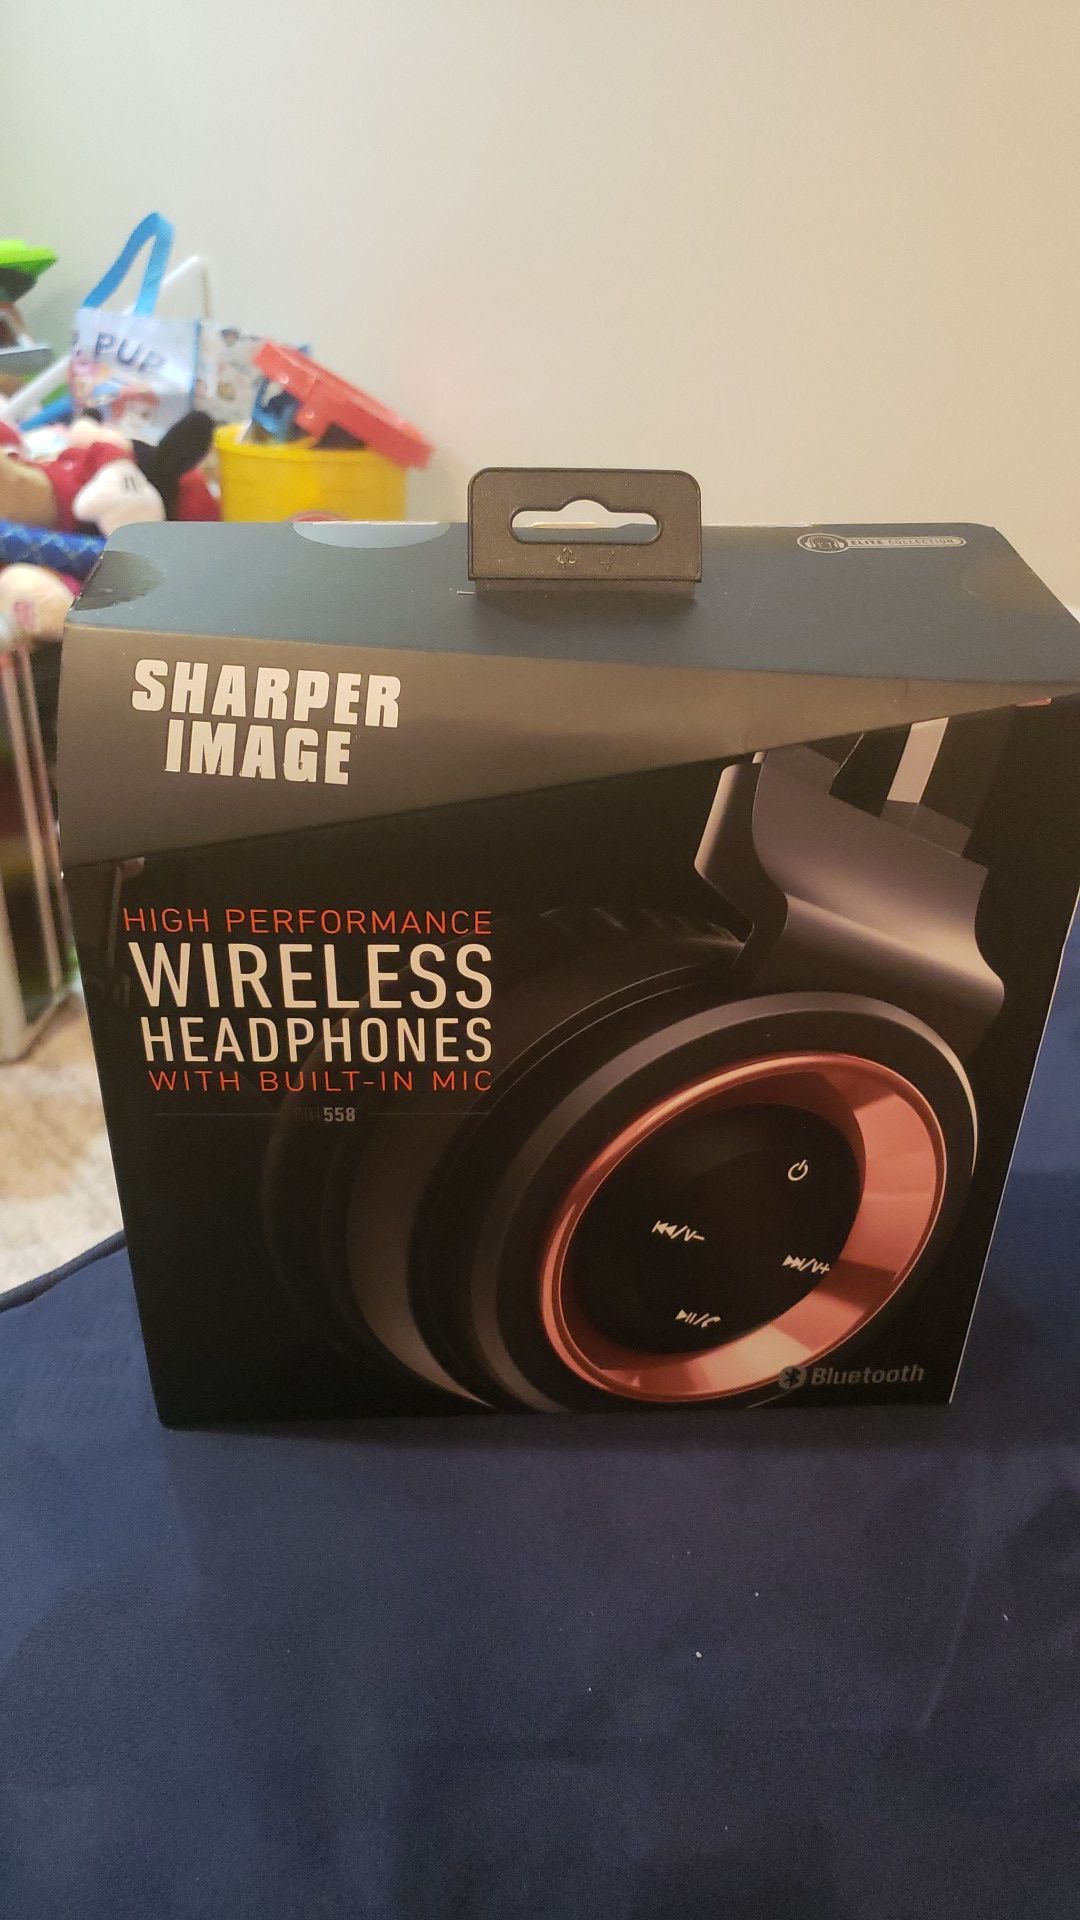 Sharper Image Wireless headphones